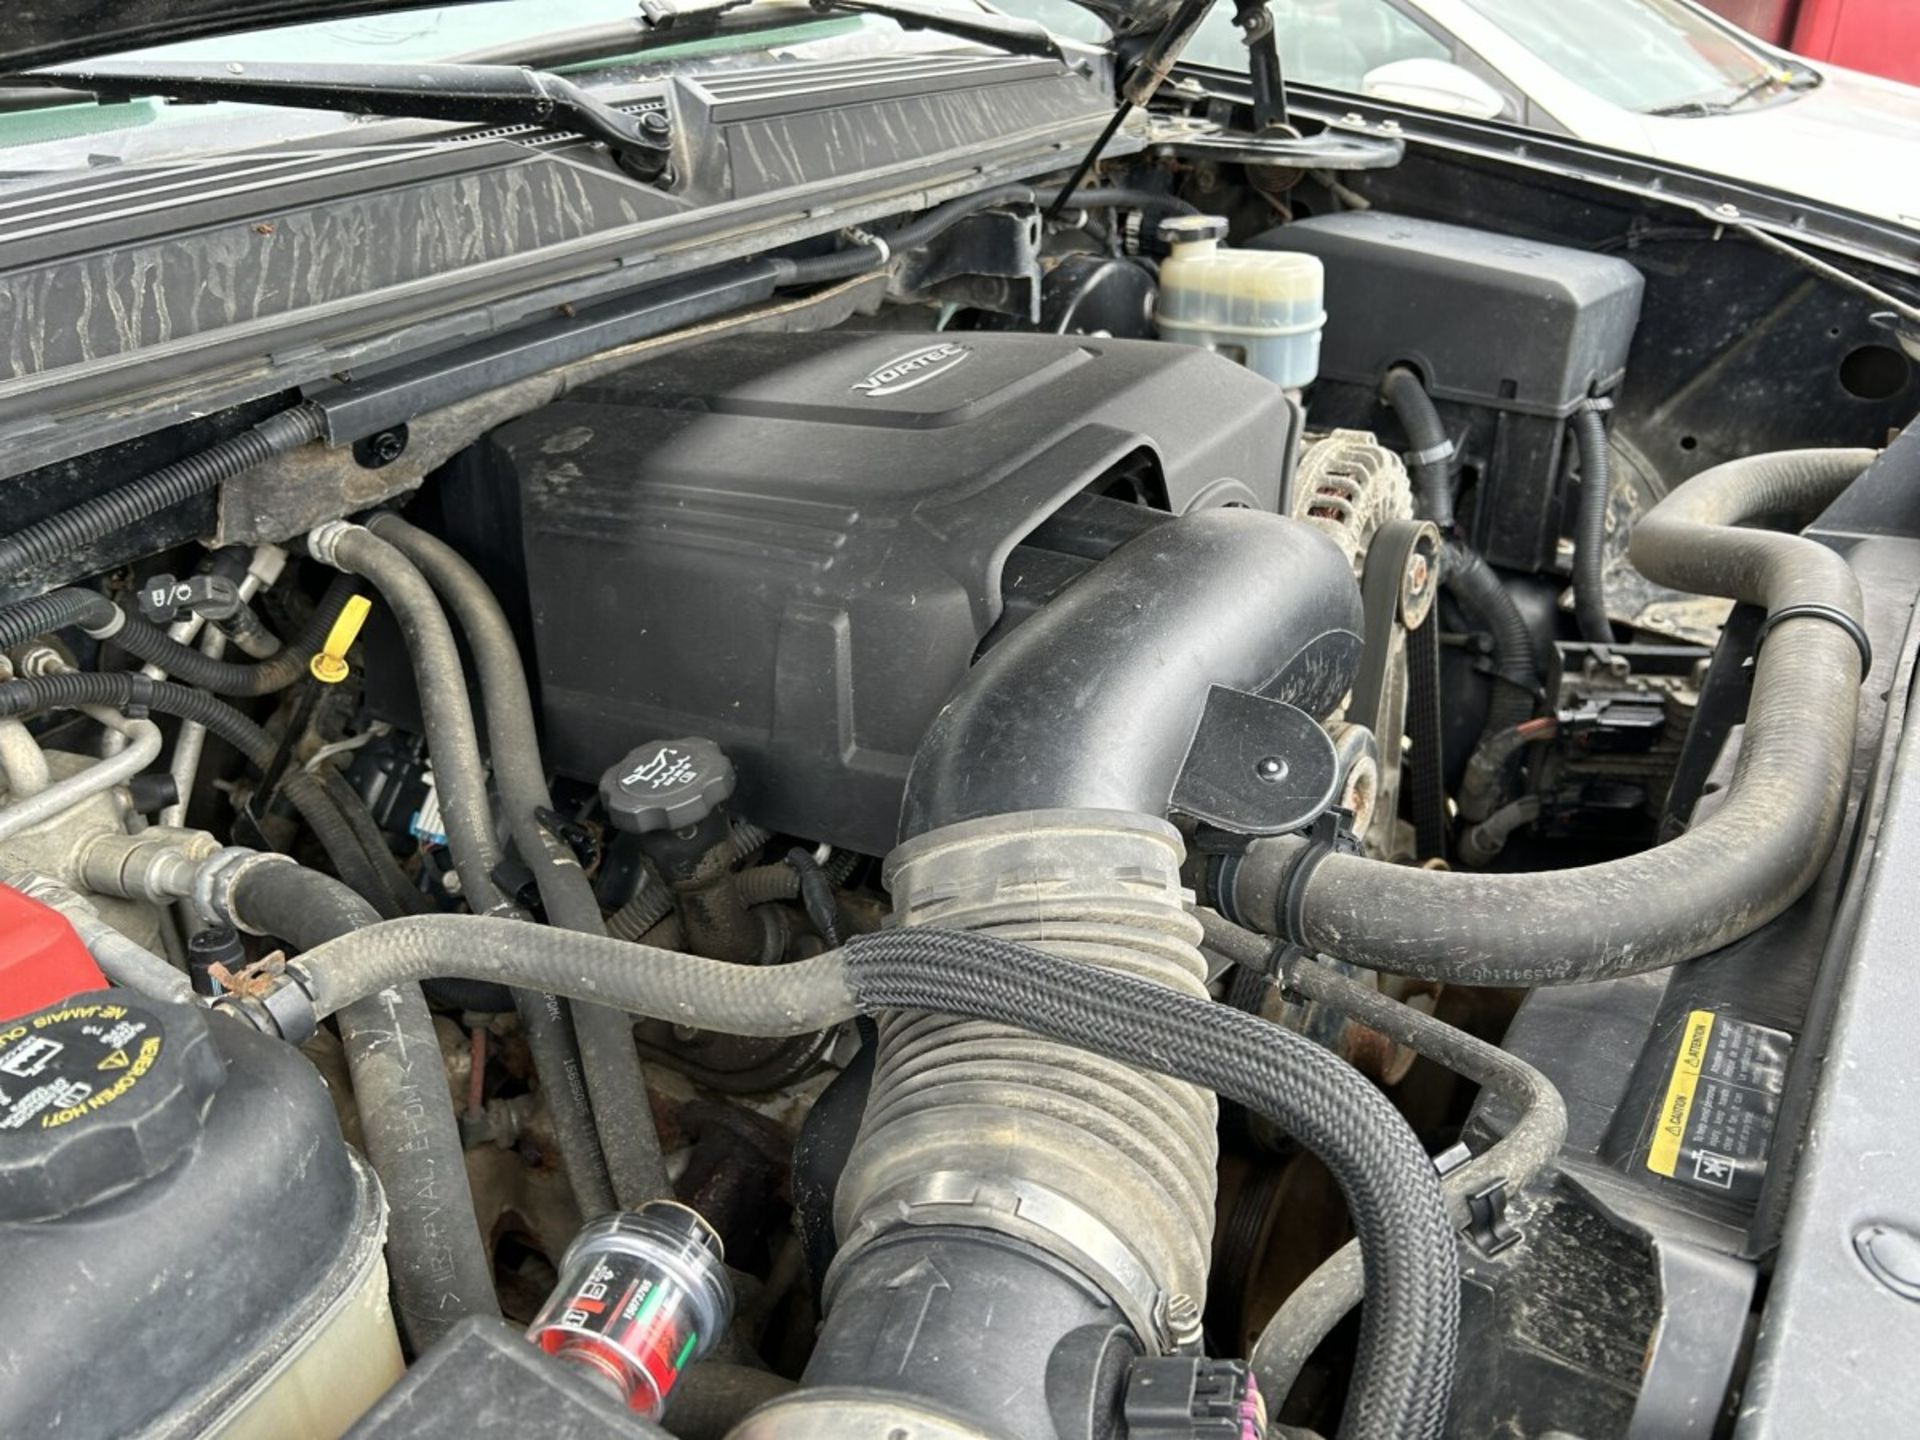 2007 GMC DENALI SUV, VORTEC V8 ENGINE, AT/AL/T/C/AM/FM/CD/PW/PL/PS - LEATHER, SUNROOF 471,283 KM'S - Image 14 of 18